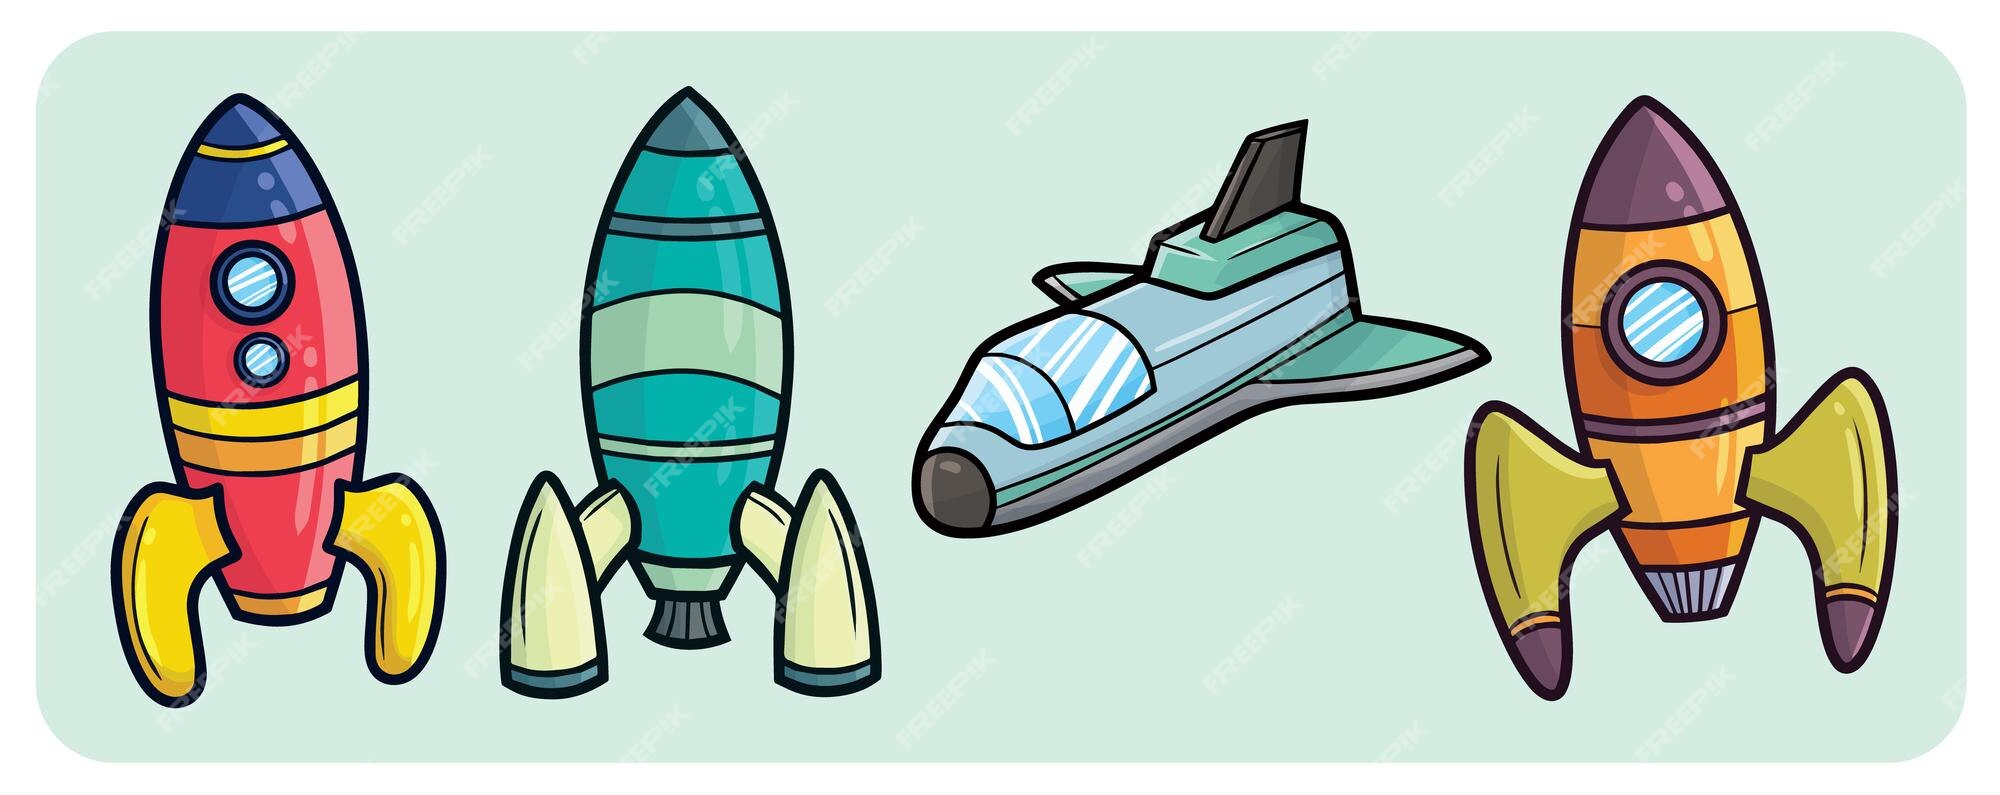 Premium Vector | Funny space rocket cartoon illustrations